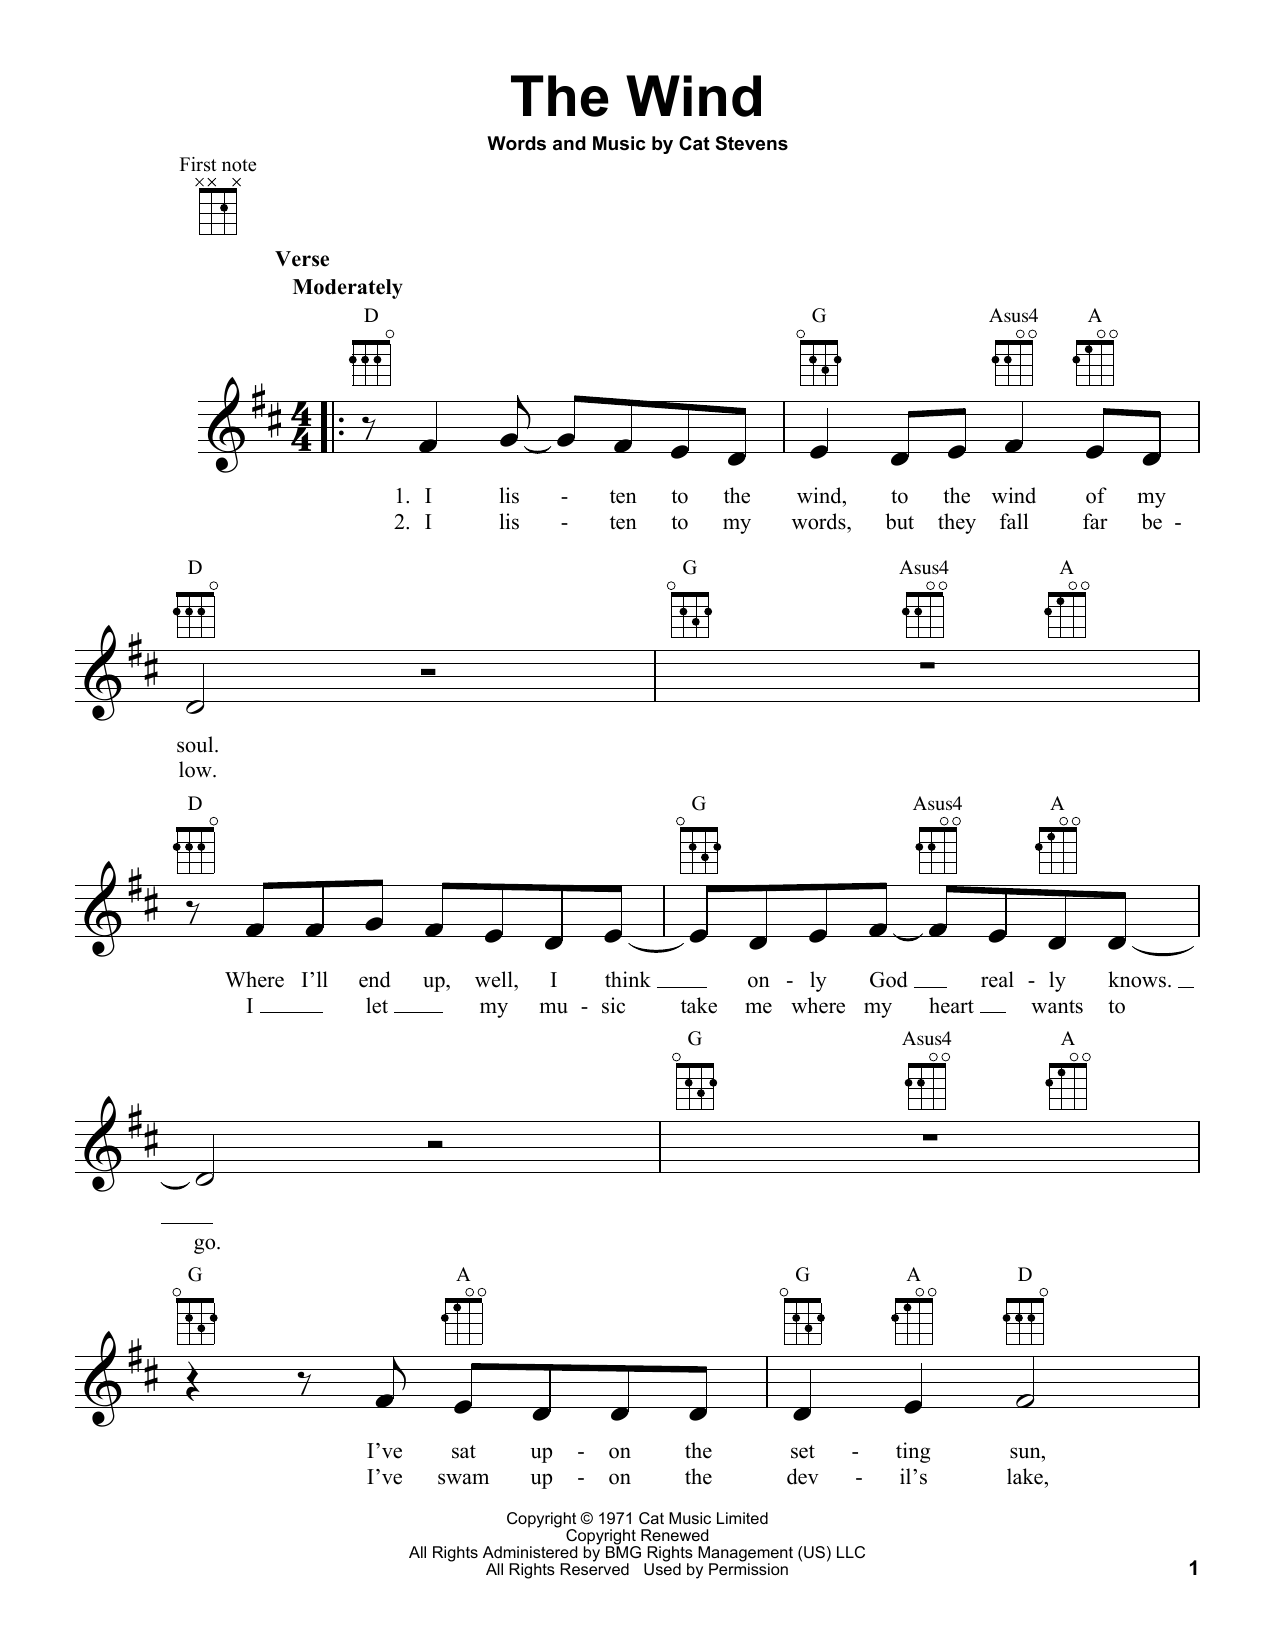 Yusuf/Cat Stevens The Wind Sheet Music Notes & Chords for Ukulele - Download or Print PDF